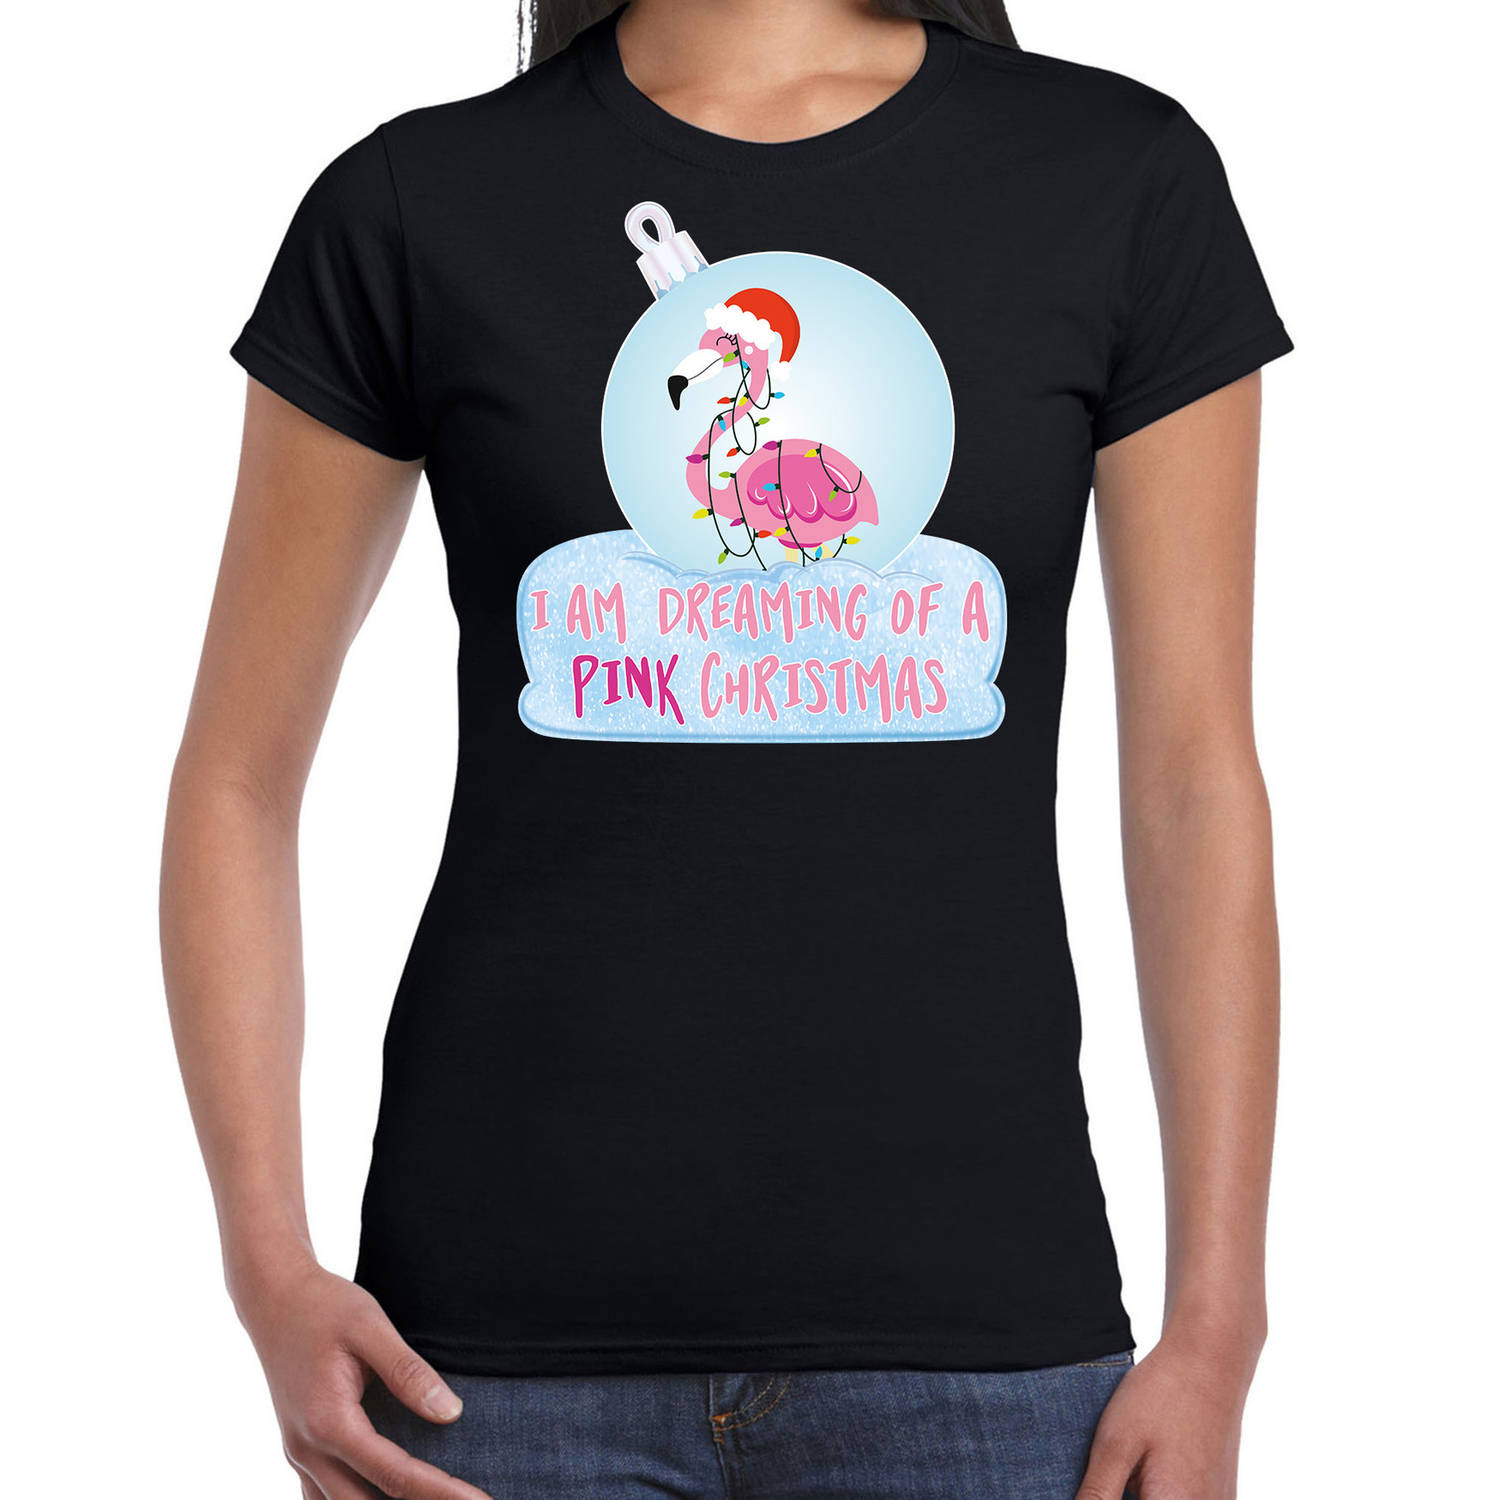 Zwart Kerstshirt / Kerstkleding I am dreaming of a pink Christmas voor dames met flamingo kerstbal XS - kerst t-shirts